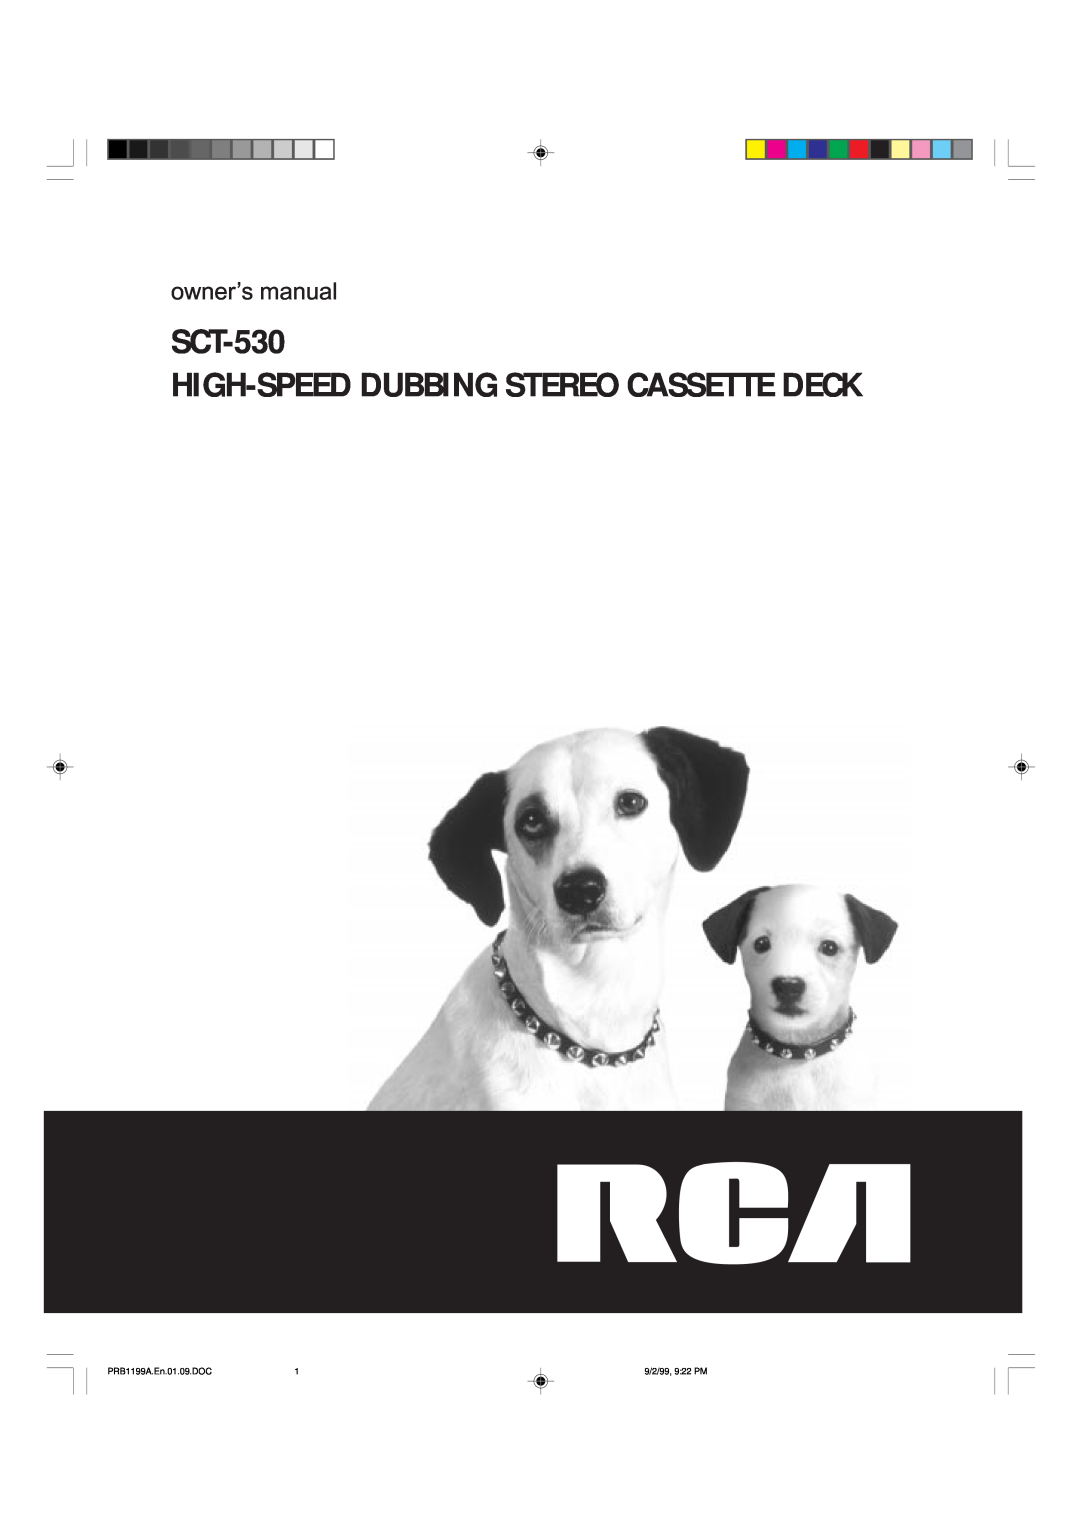 RCA owner manual SCT-530 HIGH-SPEEDDUBBING STEREO CASSETTE DECK, ownerÕs manual, PRB1199A.En.01.09.DOC, 9/2/99, 9 22 PM 